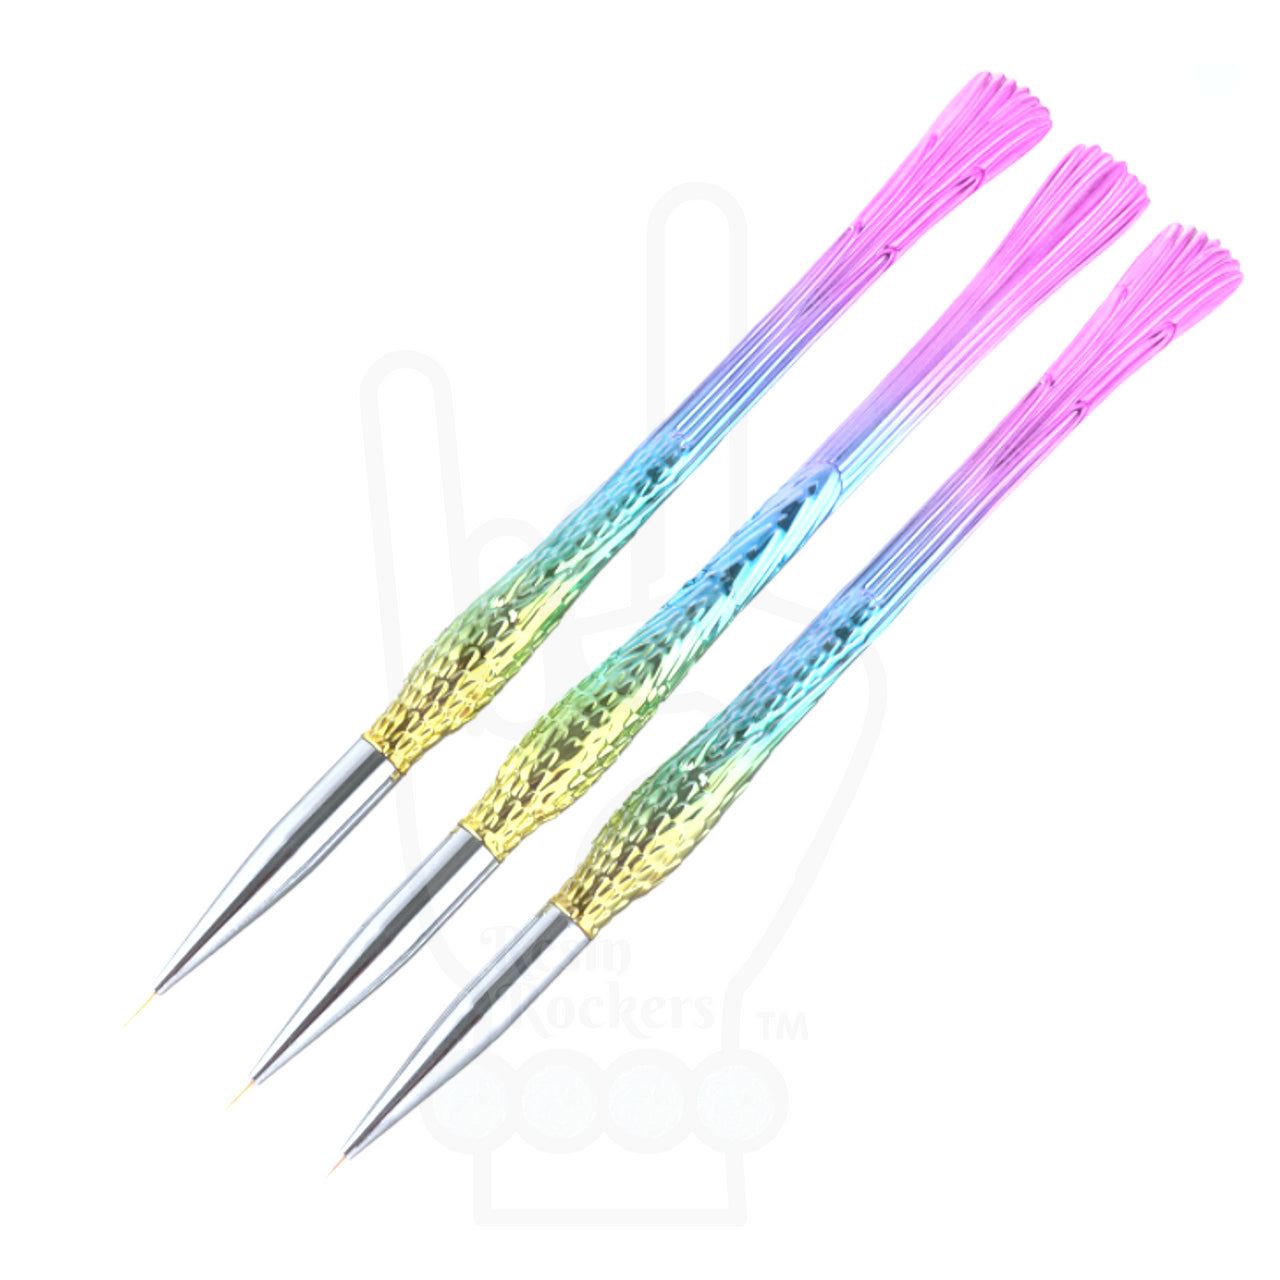 Professional Premium Striping Brush Set of 3 for Epoxy and UV Resin Art